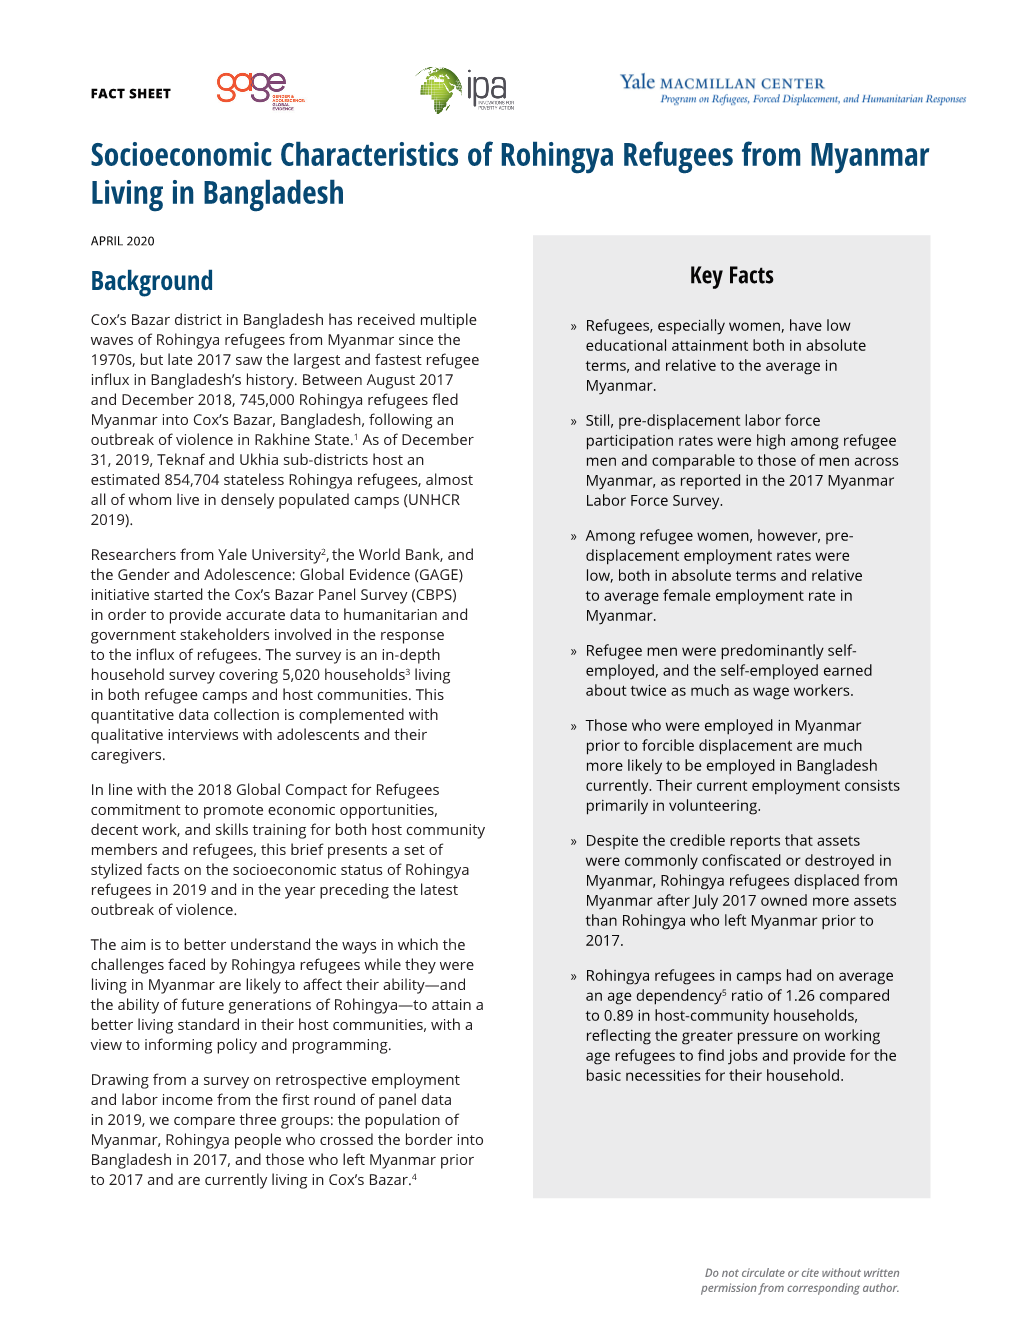 Socioeconomic Characteristics of Rohingya Refugees from Myanmar Living in Bangladesh